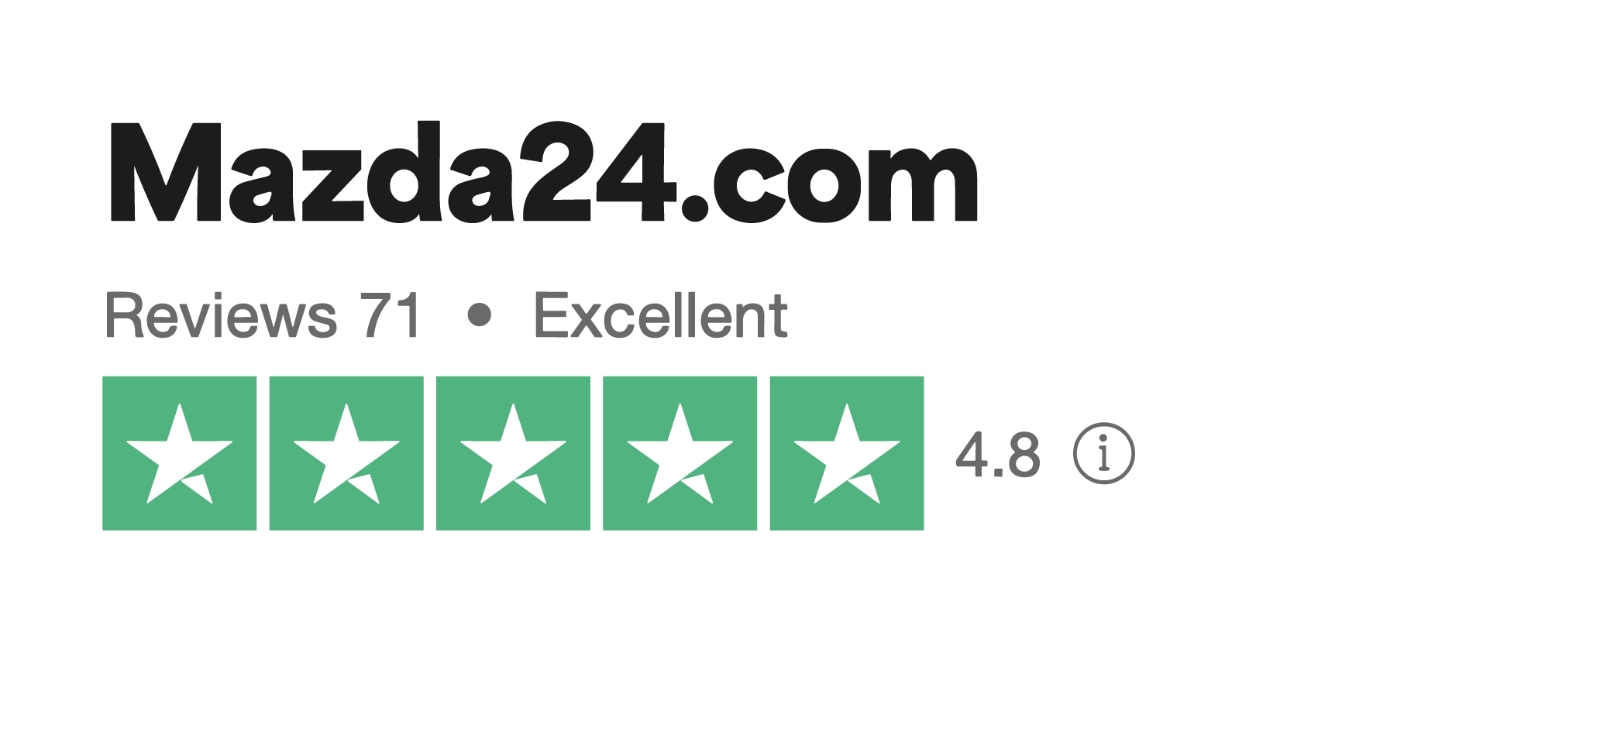 Mazda24.com Trustpilot rating